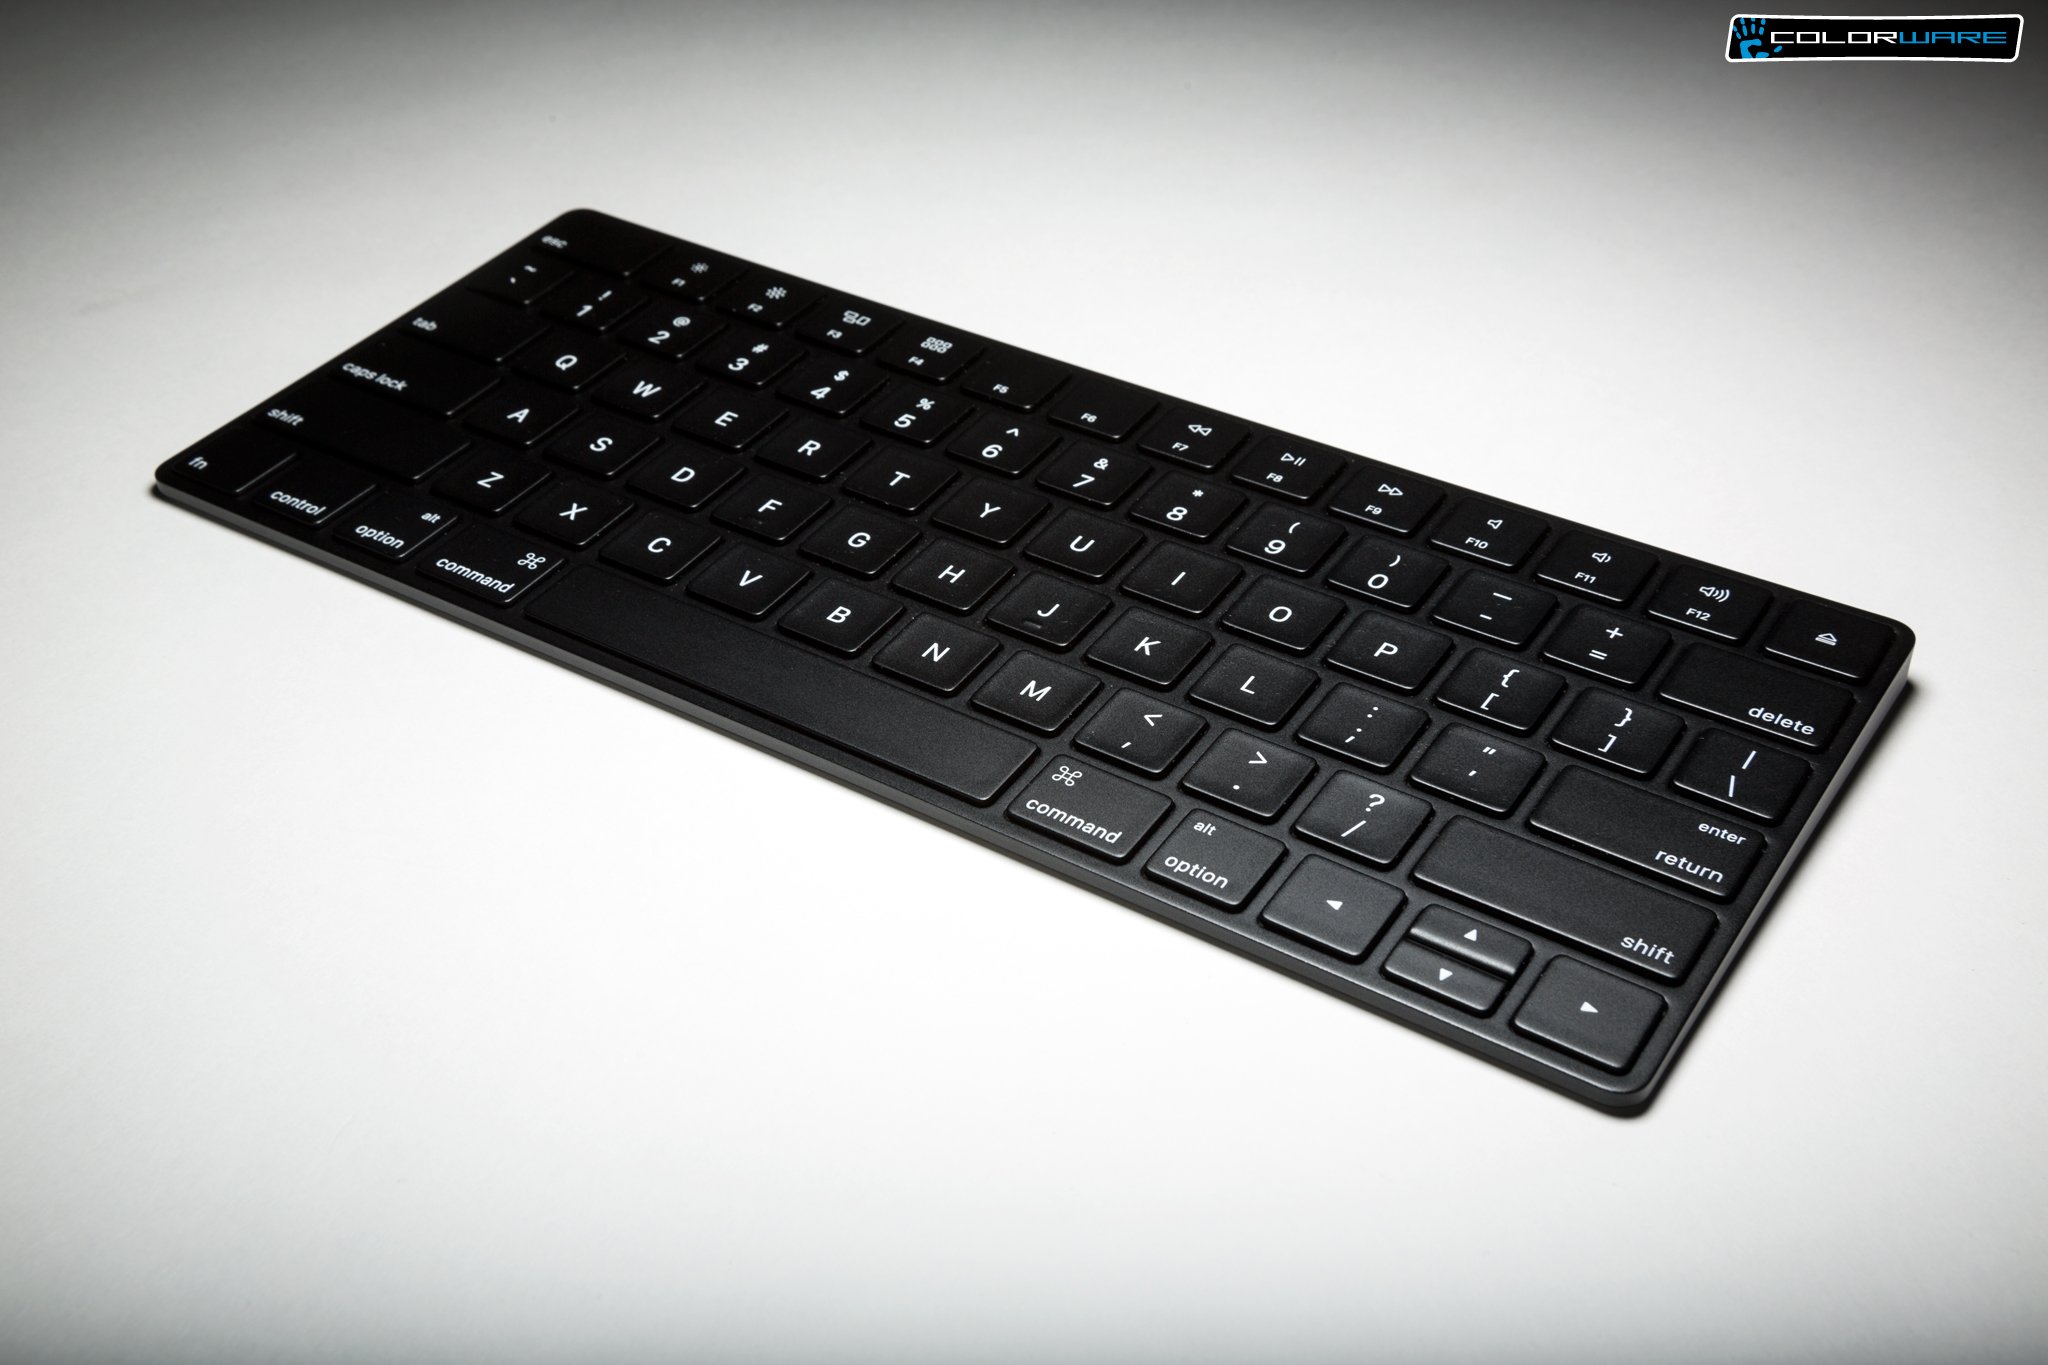 ColorWare on Twitter: "The Apple Magic Keyboard in Matte Black is